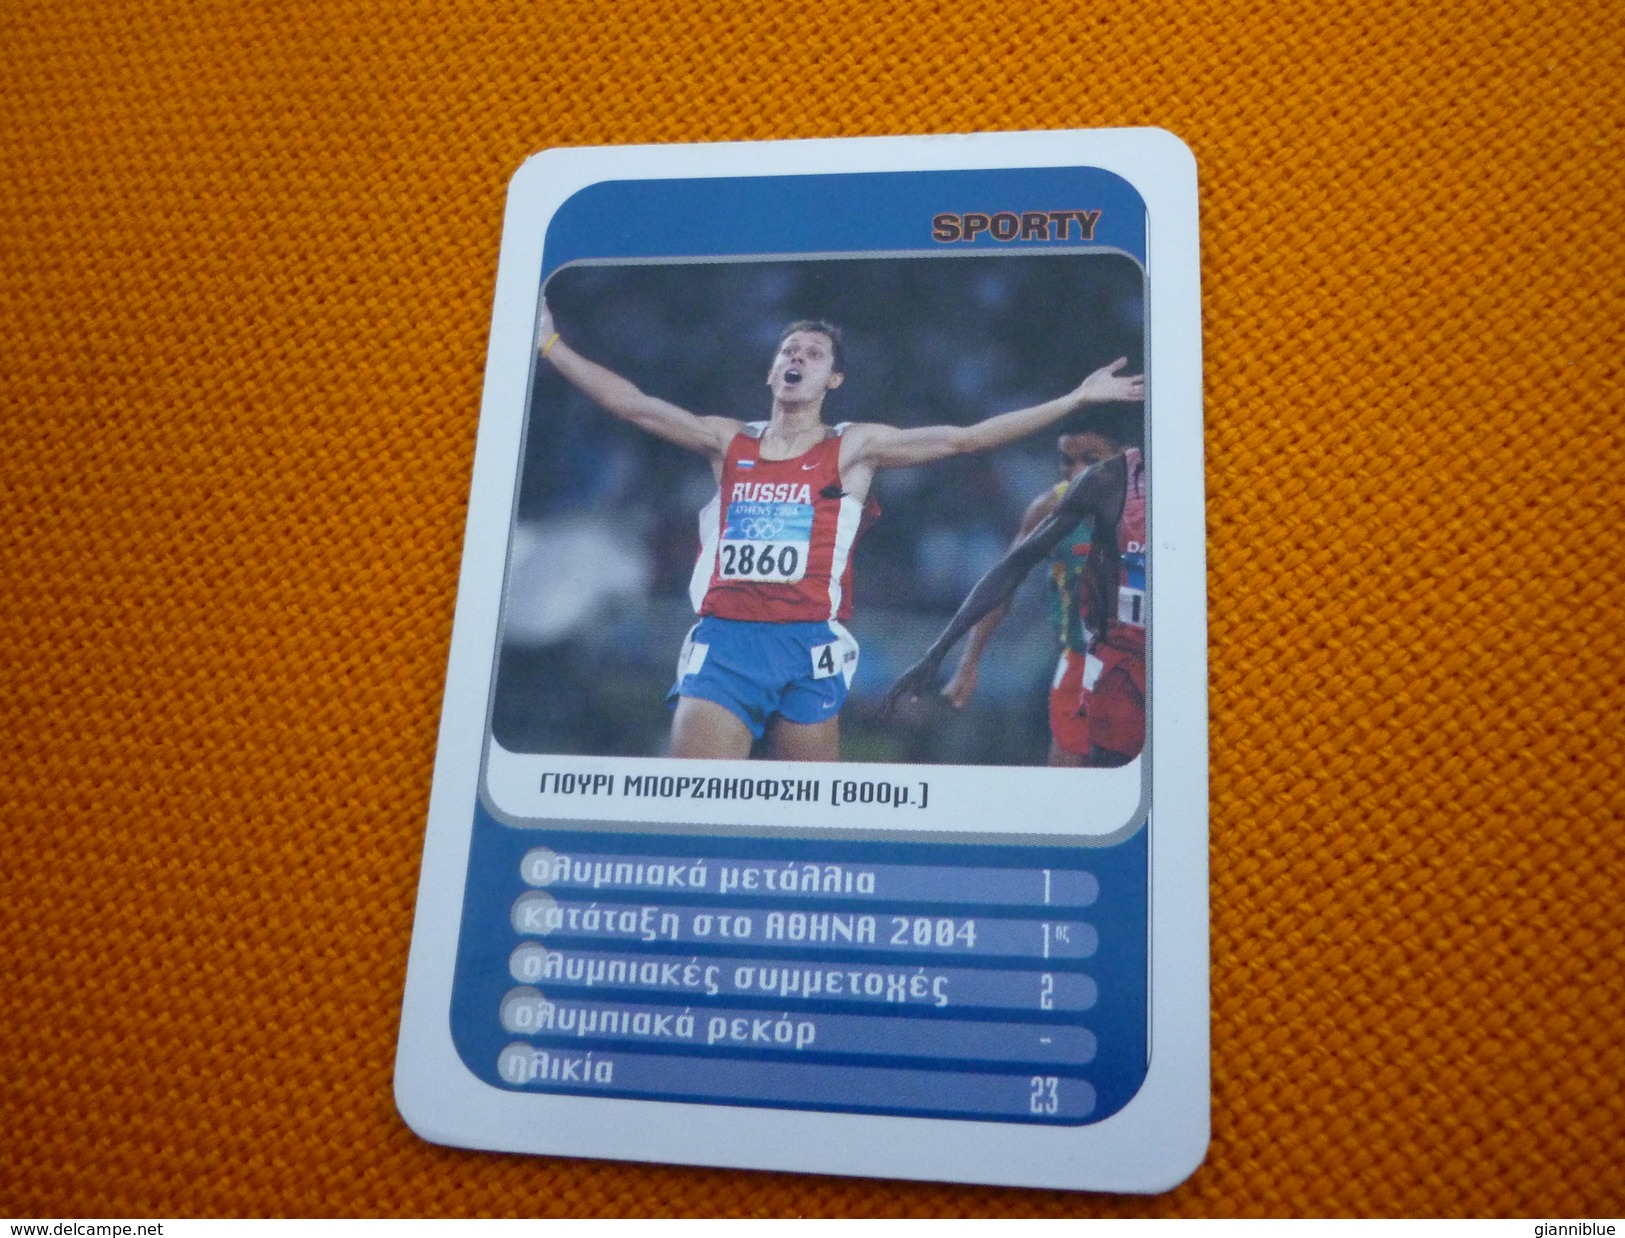 Yuriy Borzakovskiy Russian 800 M Runner Run Athens 2004 Olympic Games Medalist Greece Greek Trading Card - Tarjetas